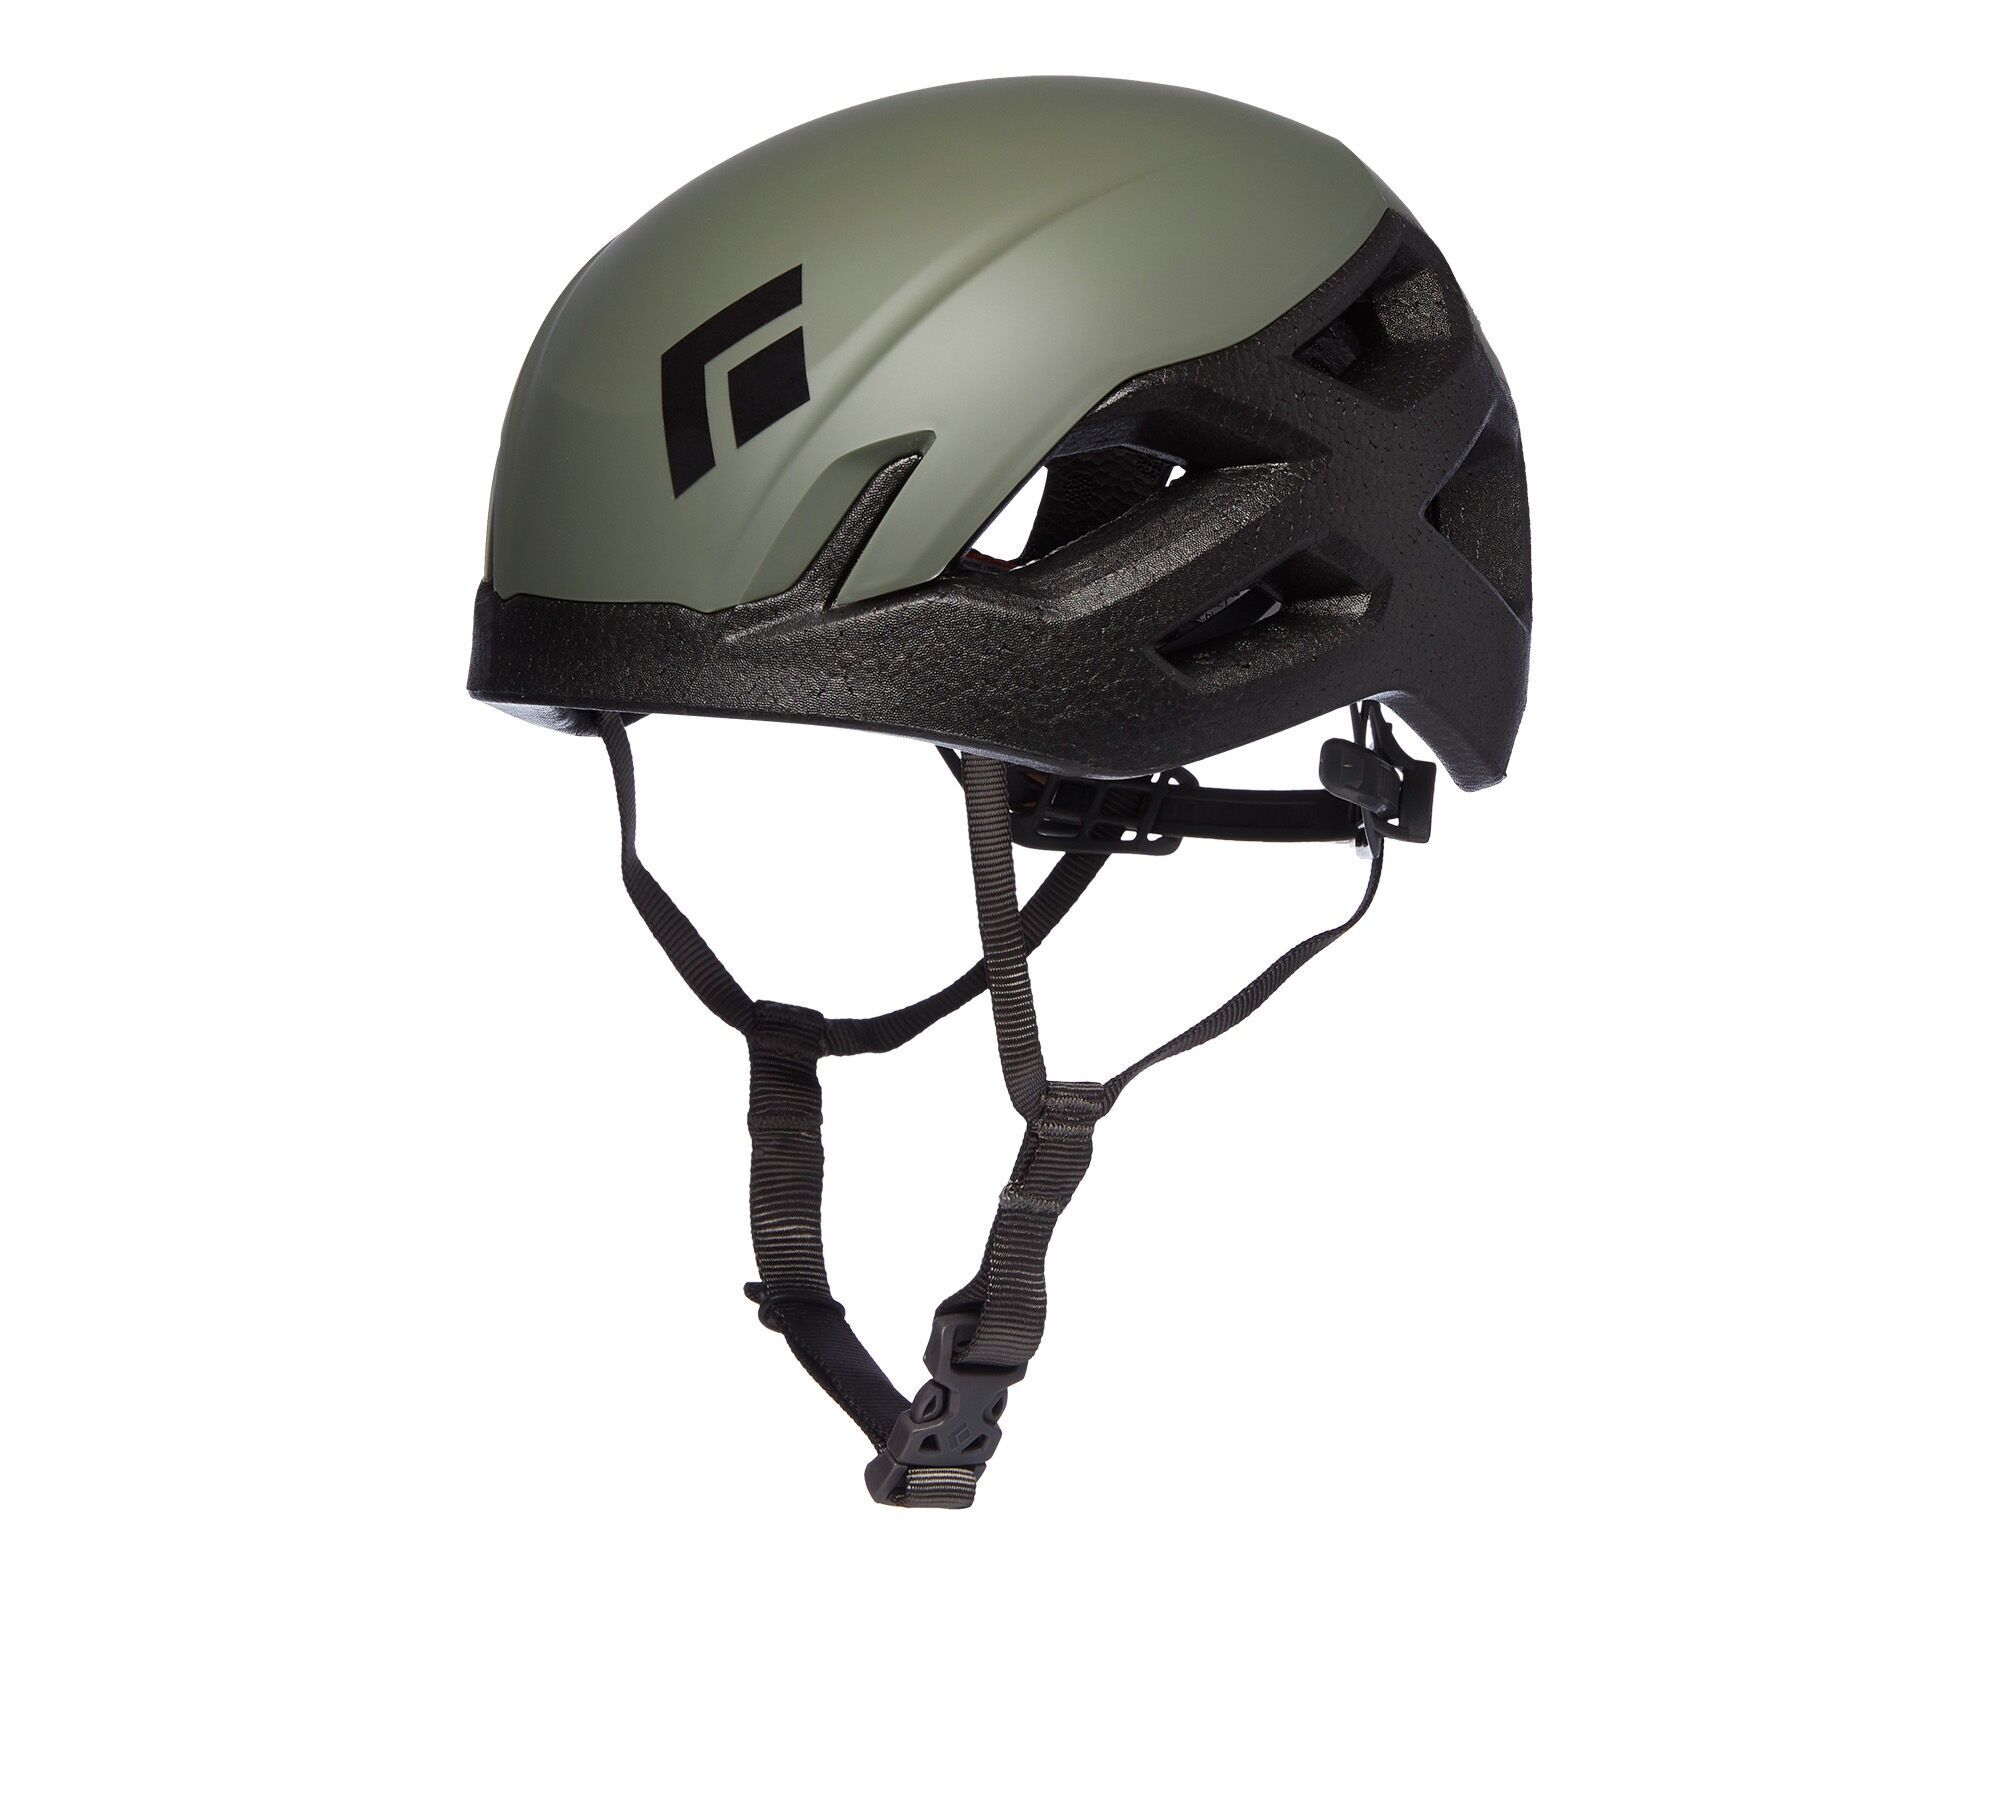 Black Diamond Vision Helmet - Climbing helmet